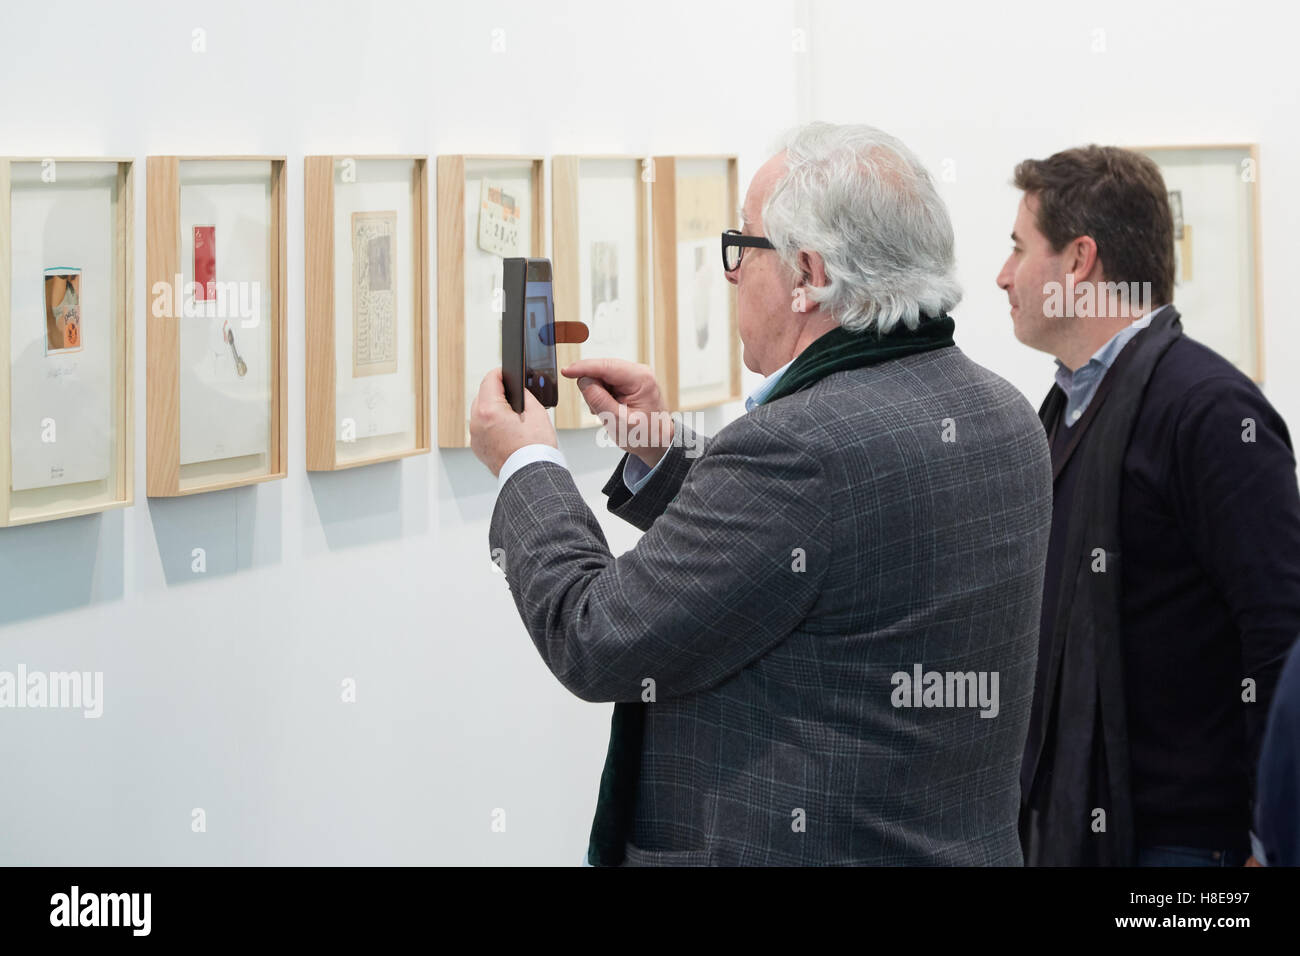 Man shooting photos during Artissima, contemporary art fair opening in Turin Stock Photo